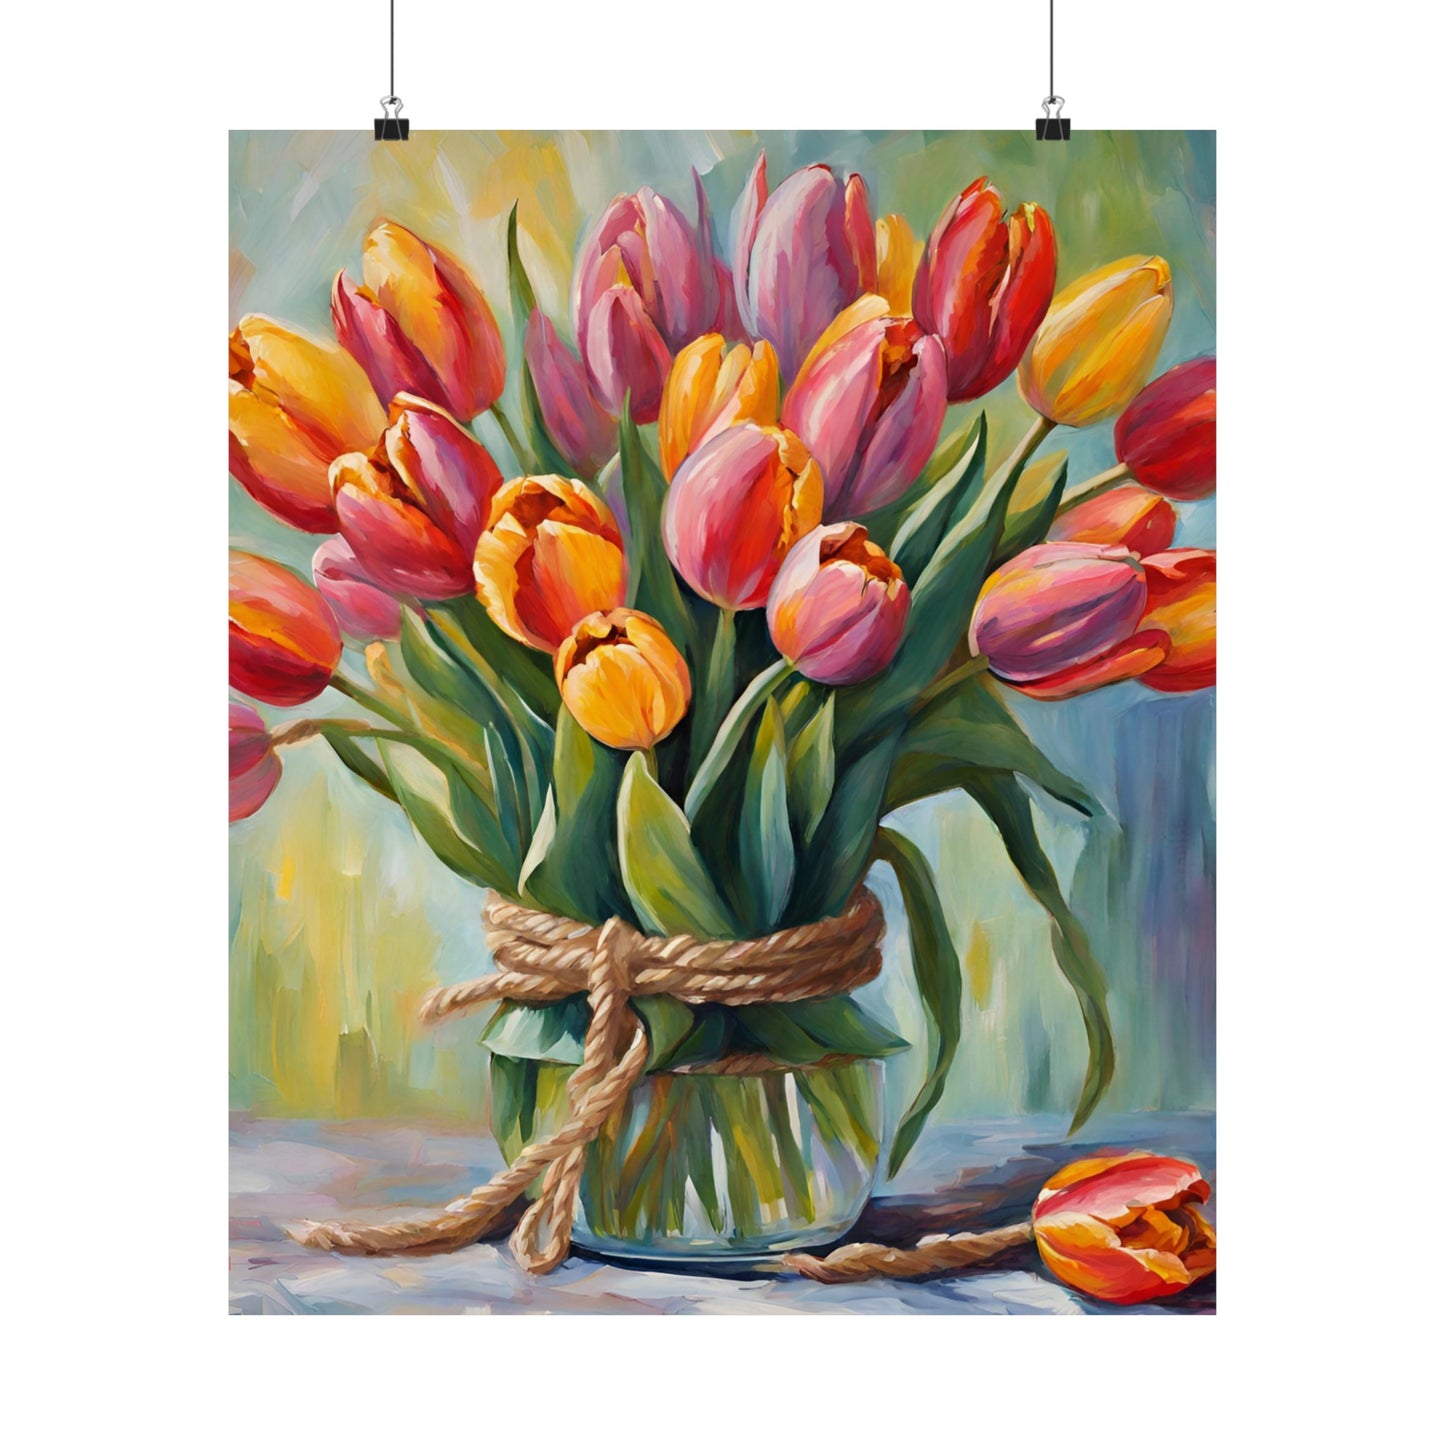 Posters - Farmer's Market Tulips